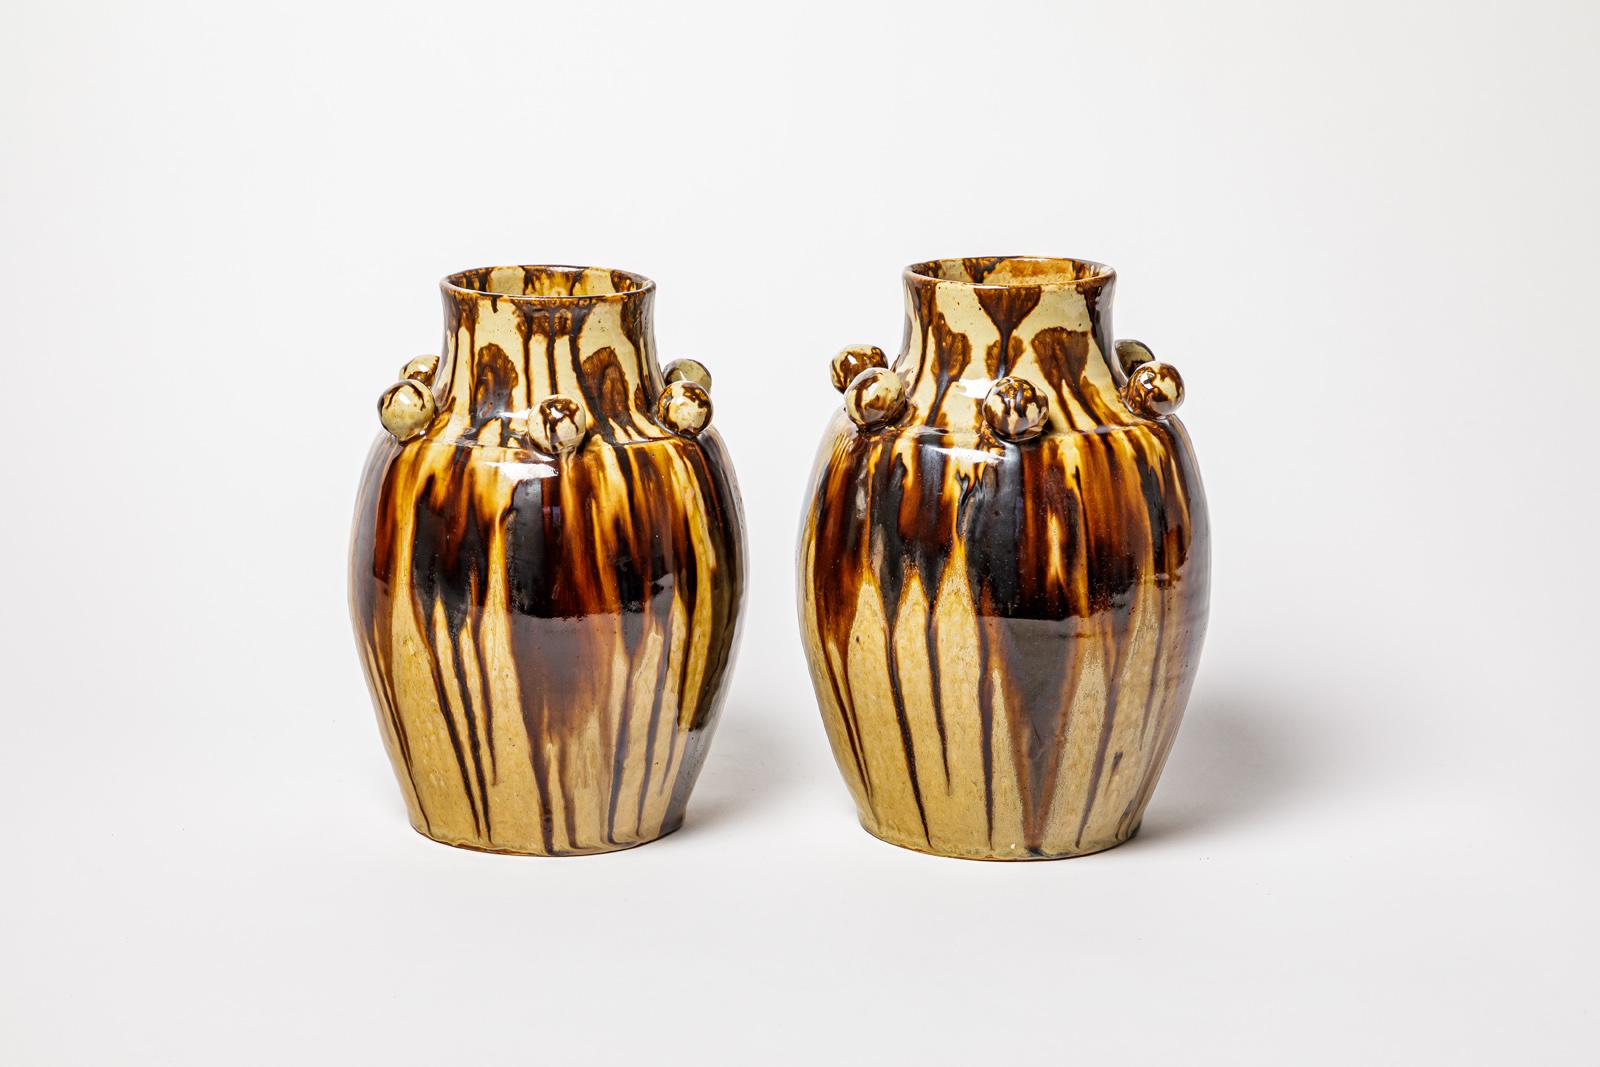 Joseph Talbot 

Large pair of art deco ceramic vases

Modernist 20th century design ceramic form

Original perfect condition

Abstract brown ceramic glazes colors

Signed under the base

Height 28 cm
Large 18 cm